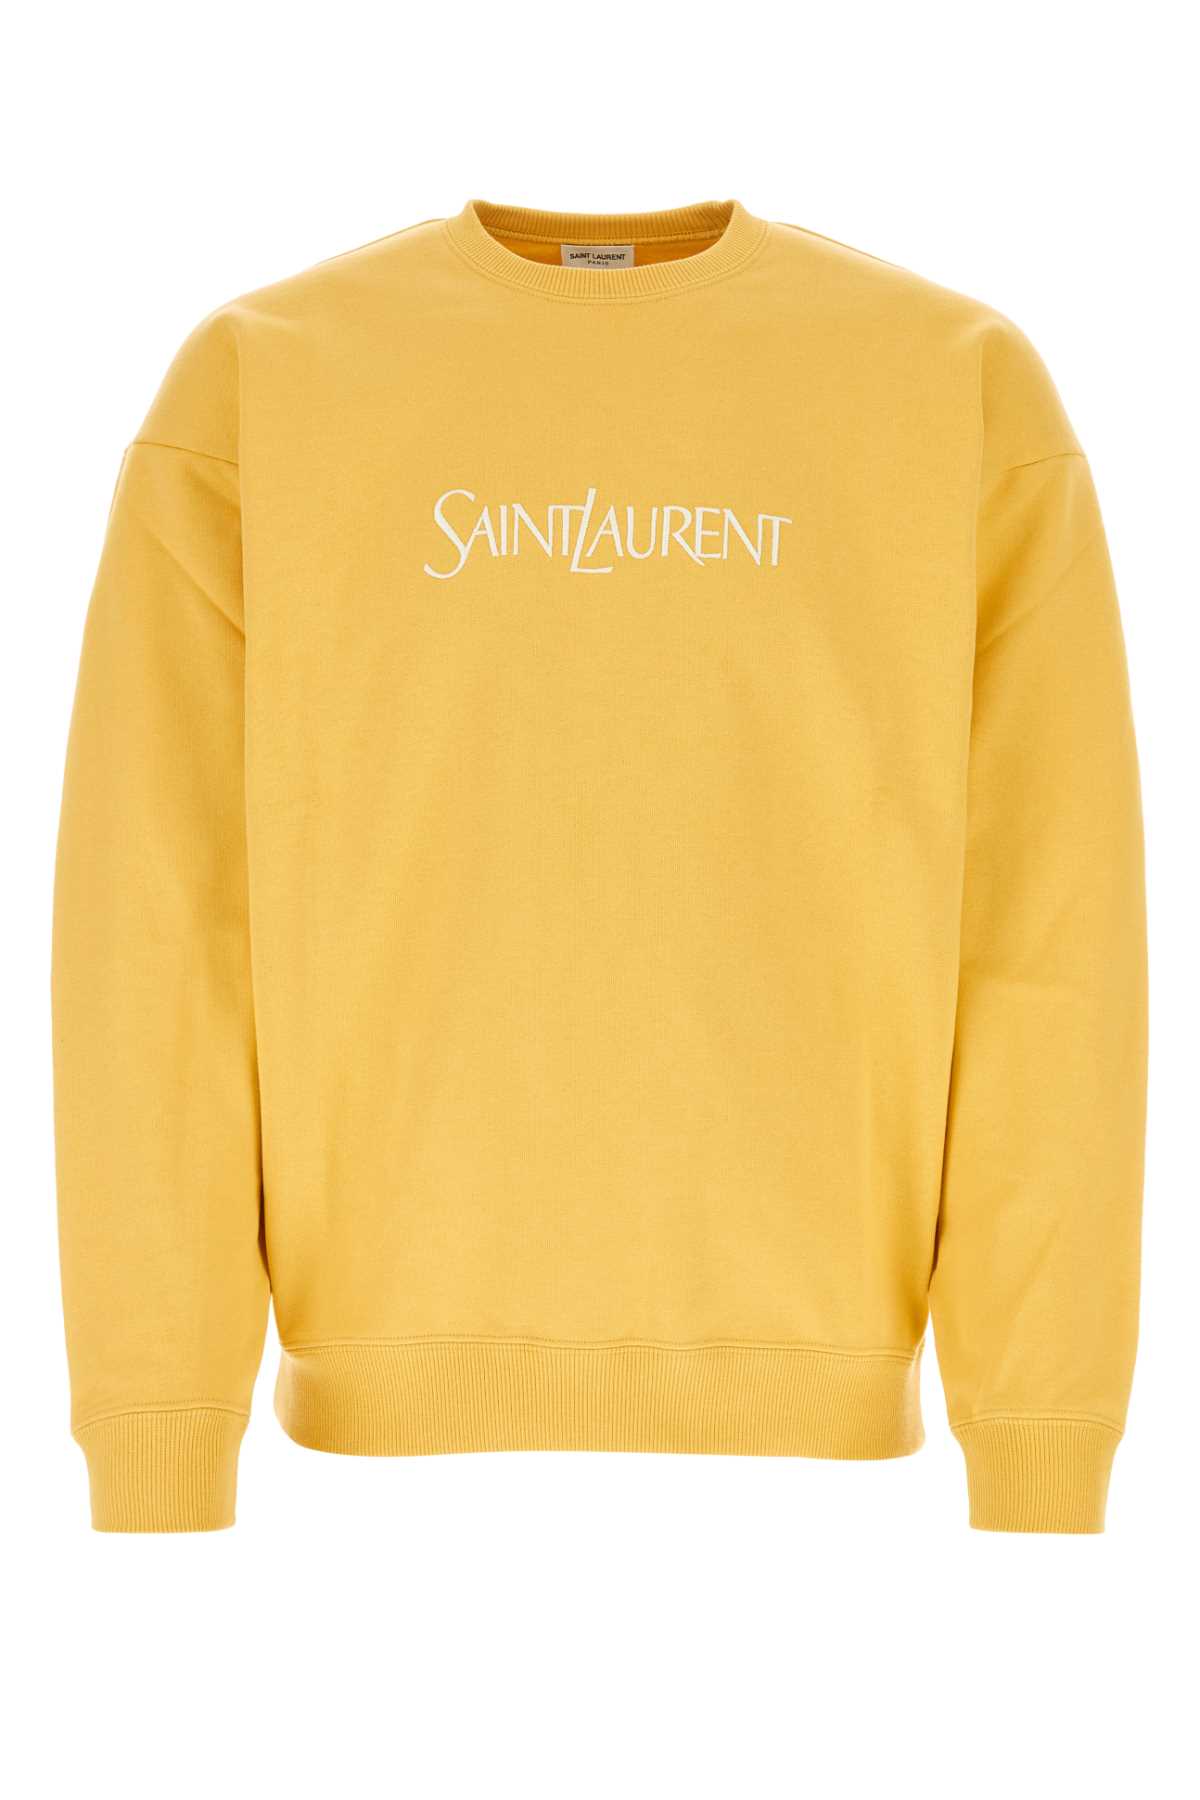 Saint Laurent Yellow Cotton Sweatshirt In Jaunenaturel